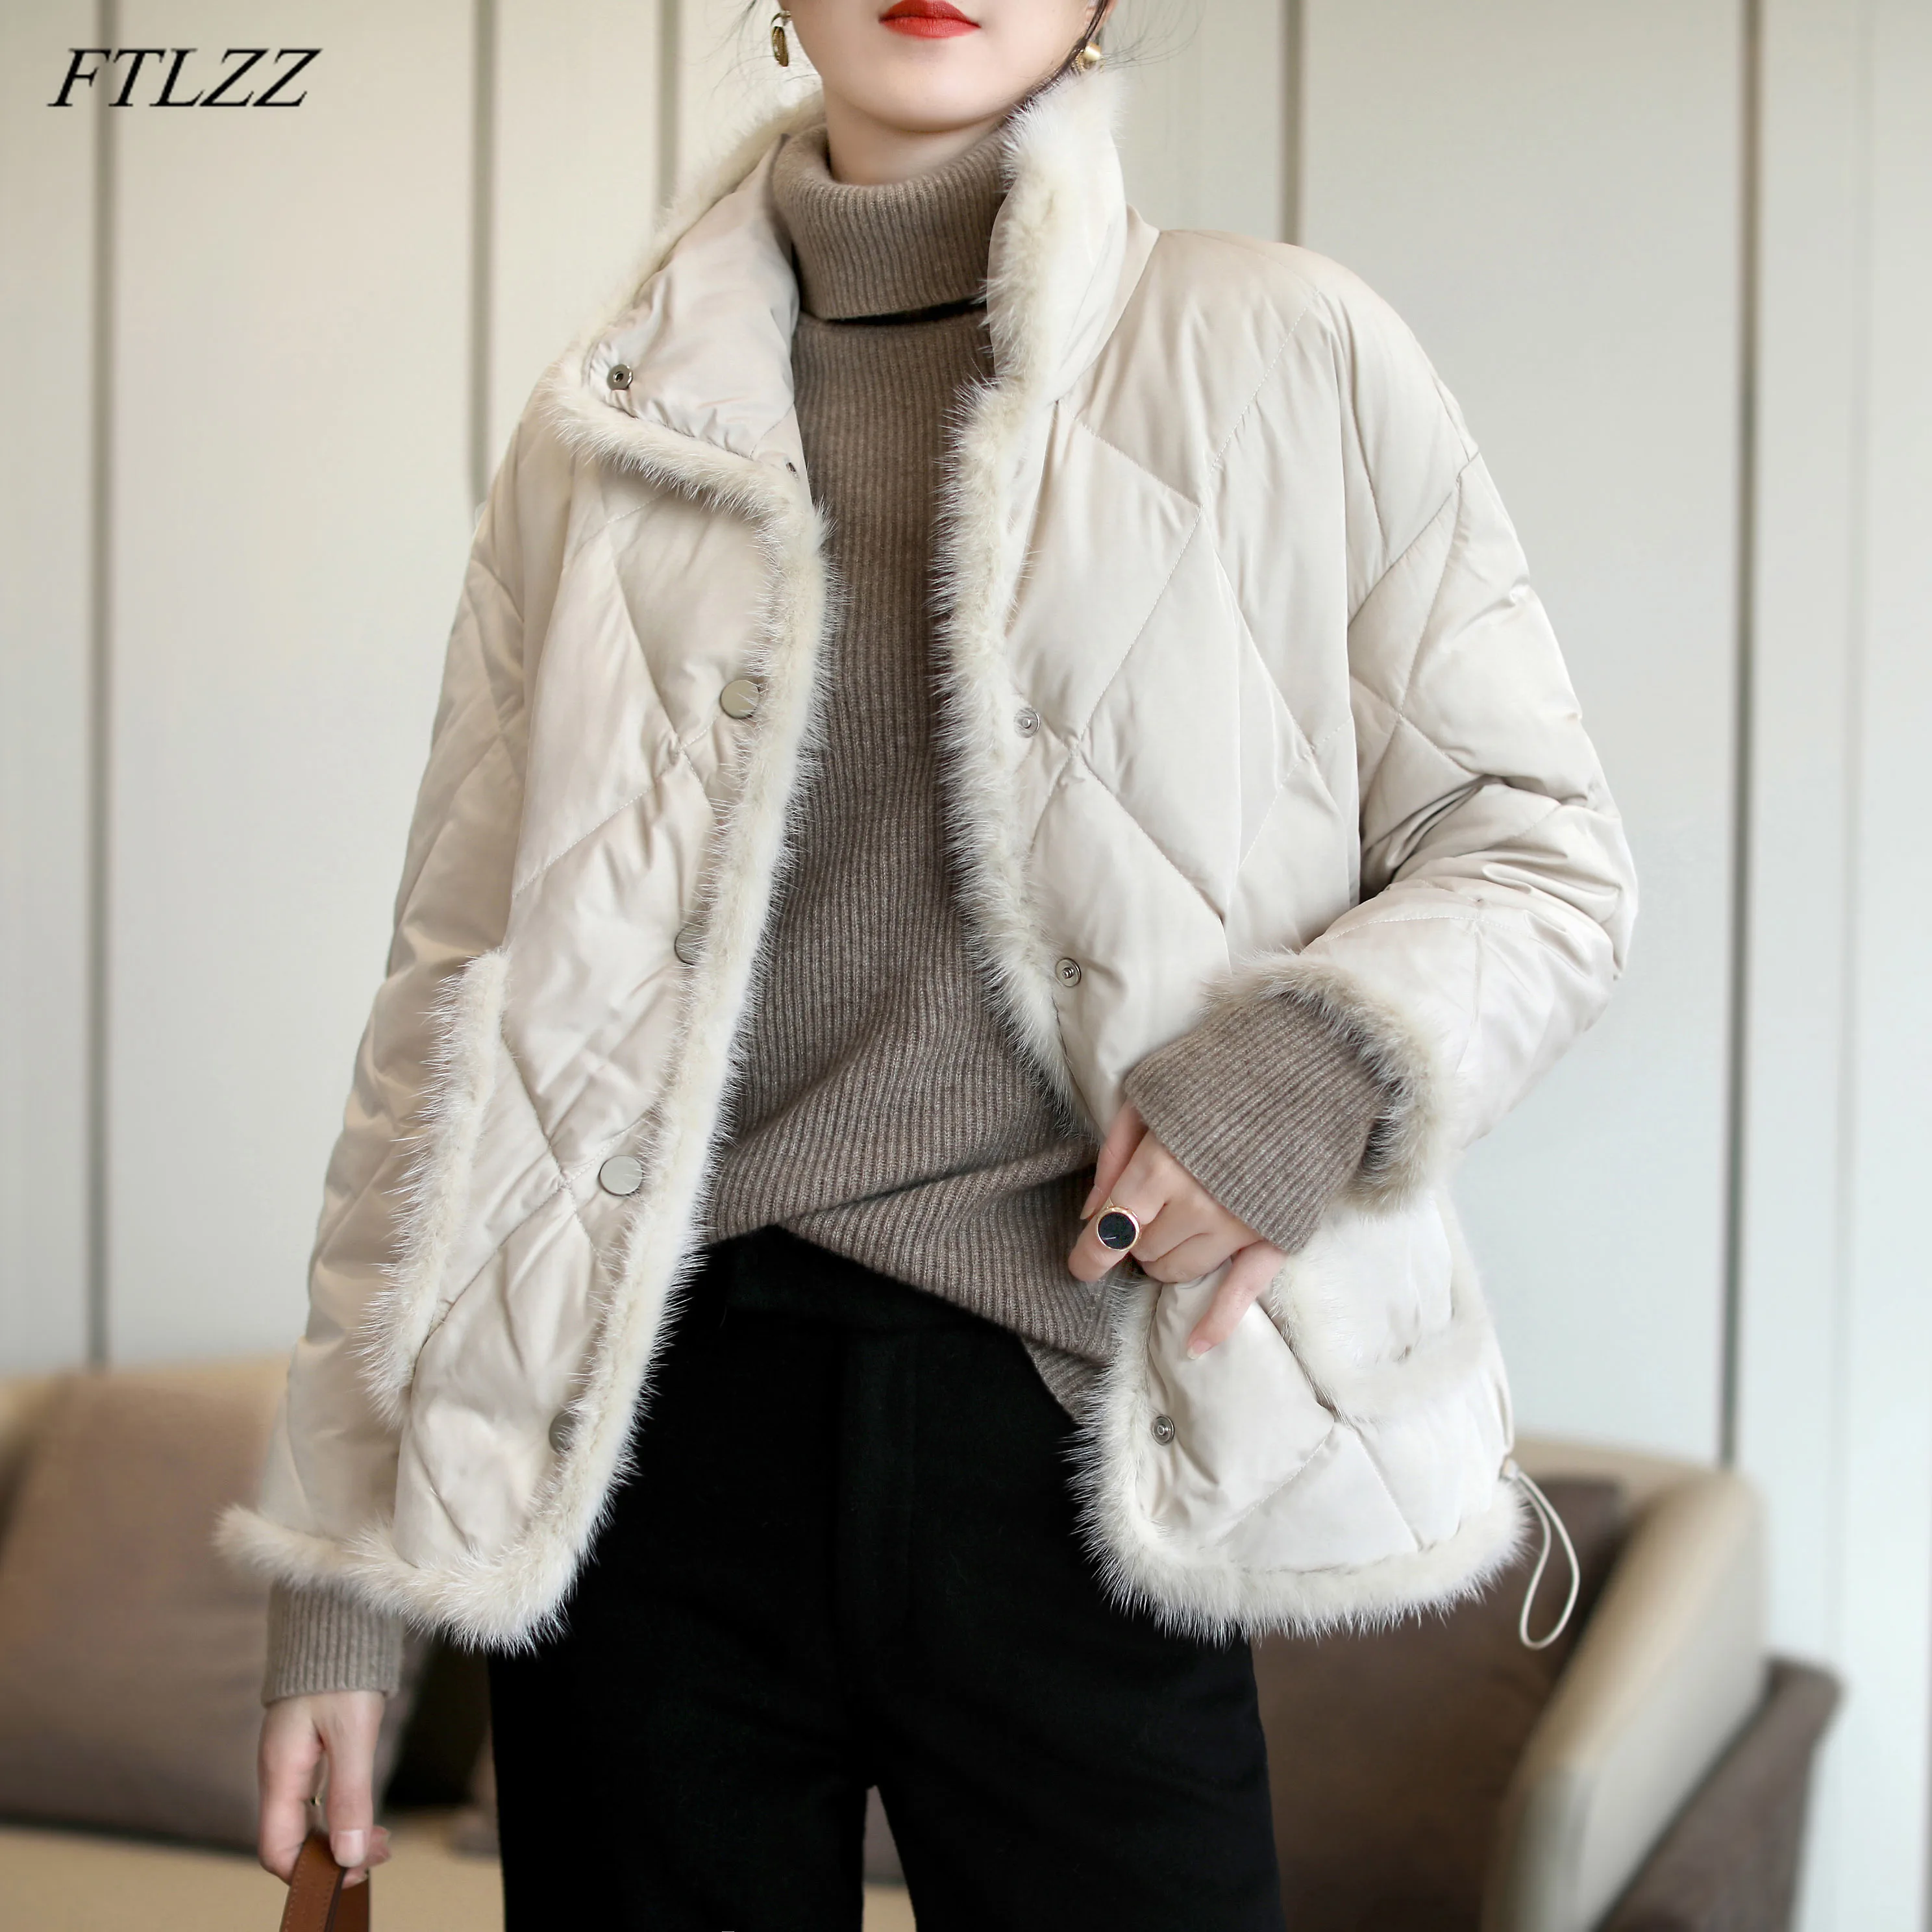 FTLZZ Winter Vintage Splicing Mink Hair Jacket Women White Duck Down Warm  Coat Loose Light Feather Parker Solid Color Outwear